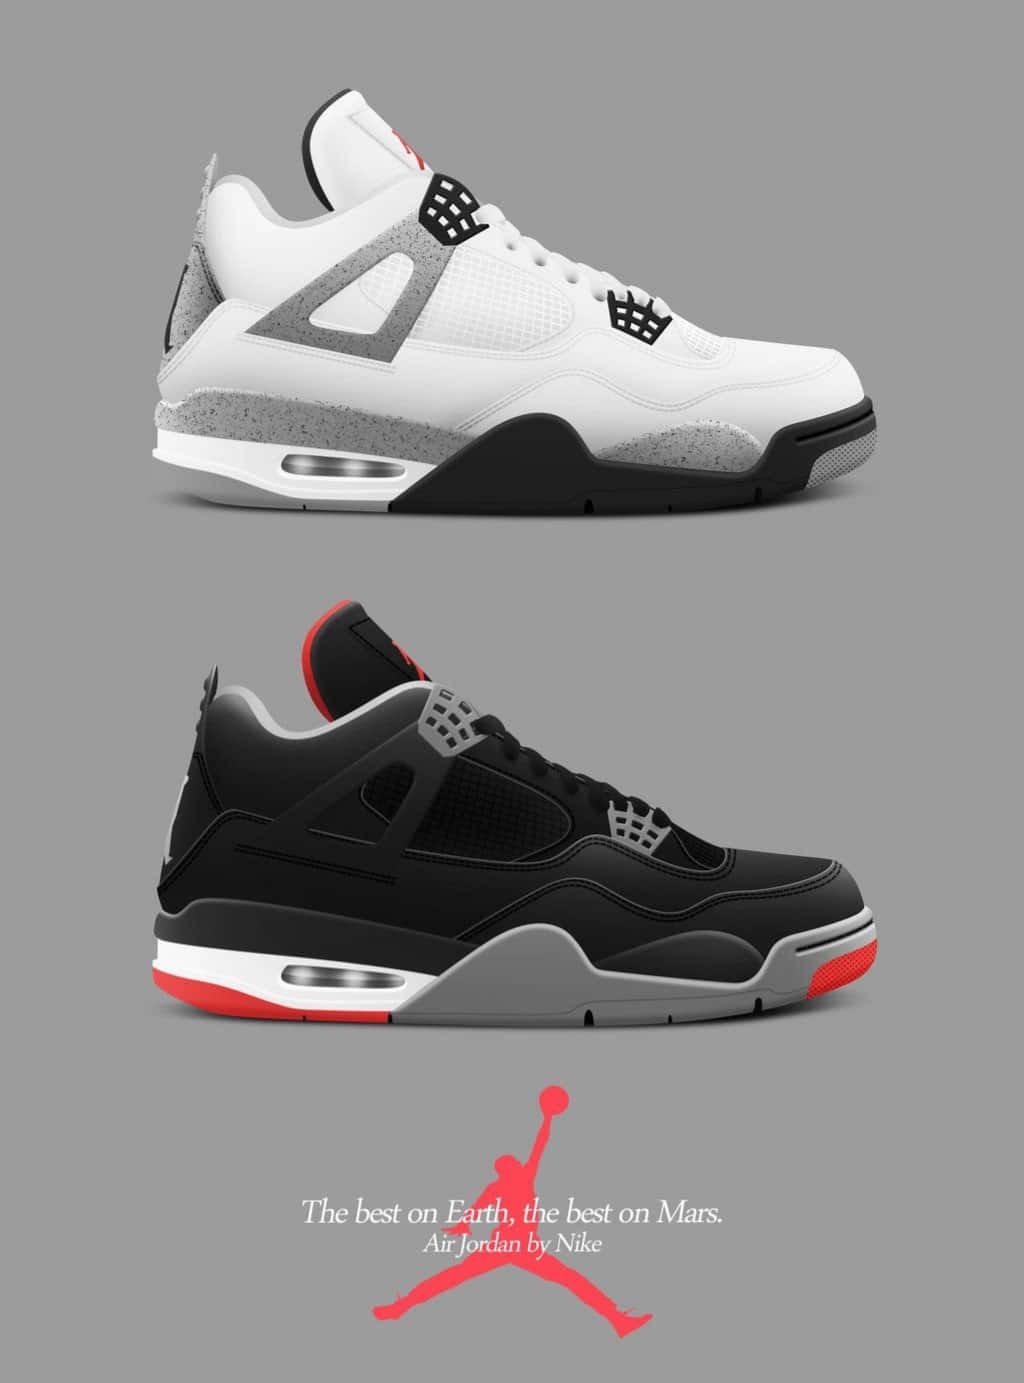 Air Jordan 4 Black&White Nike Poster Wallpaper